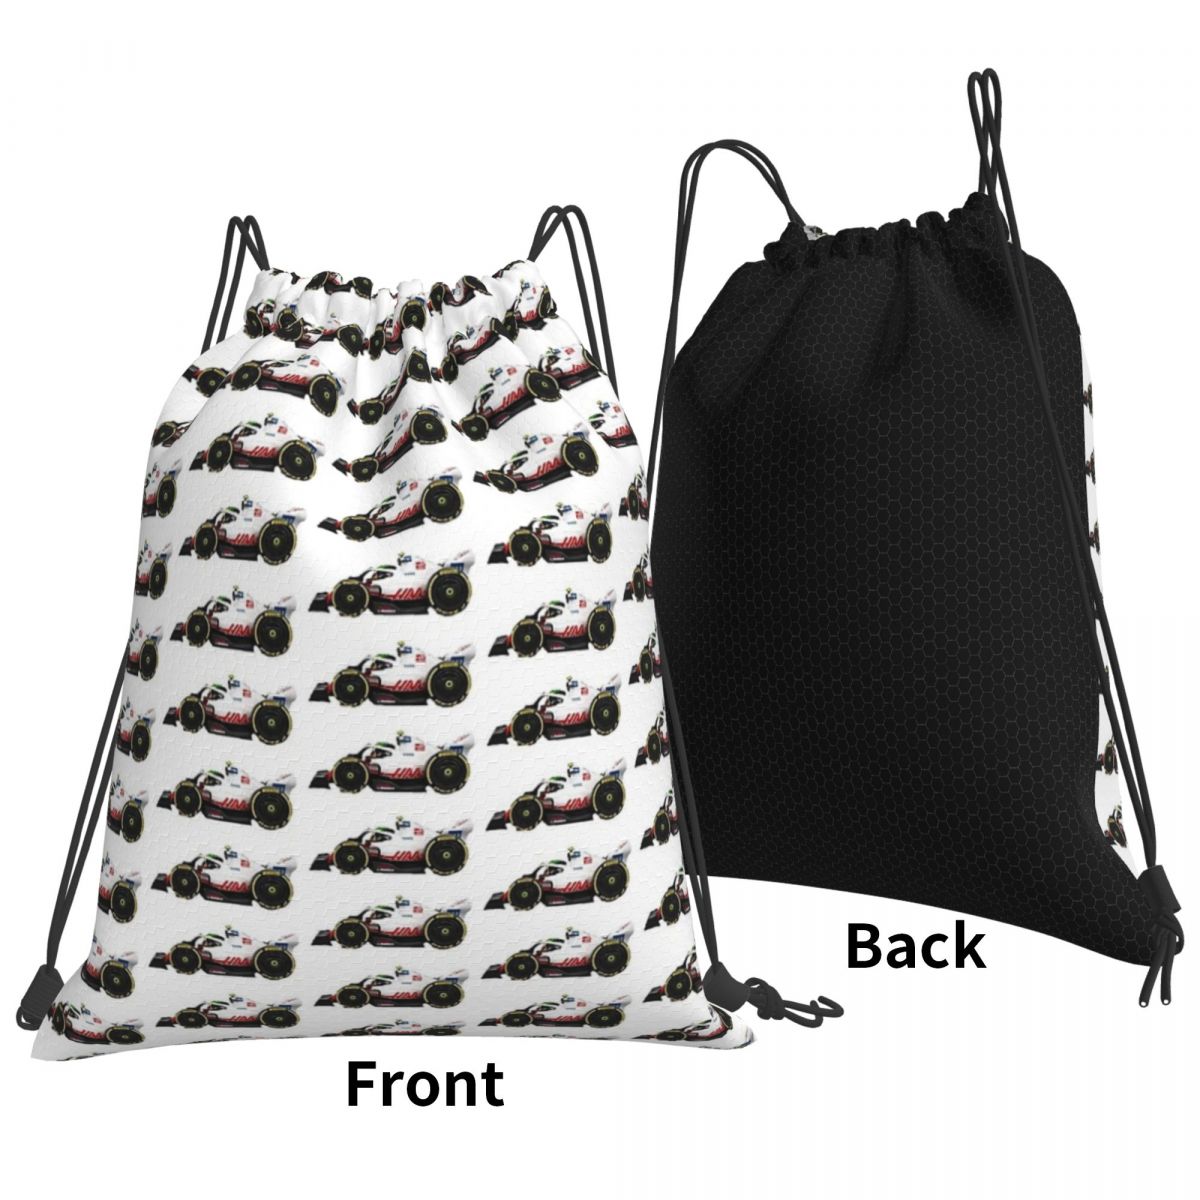 Haas F1 Car Drawstring Bag